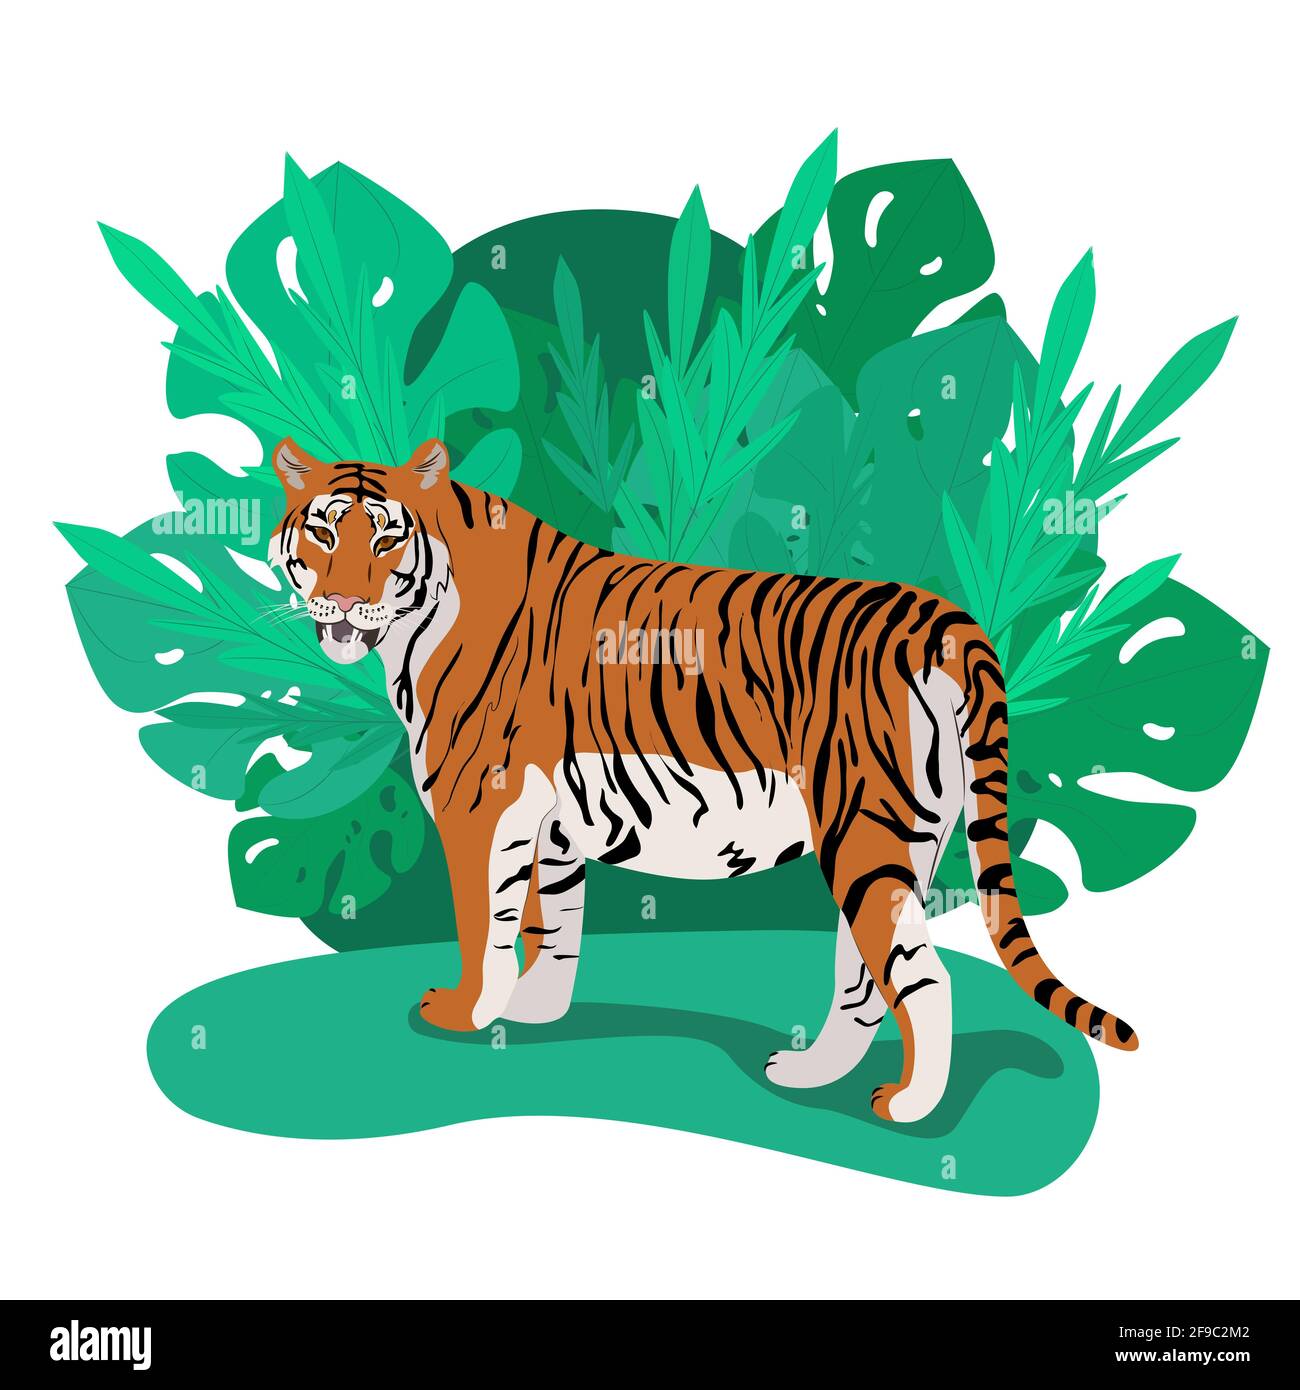 Bengal Tiger Line Icon Editable Illustration Stock Illustration - Download  Image Now - Animal, Animal Wildlife, Animals Hunting - iStock